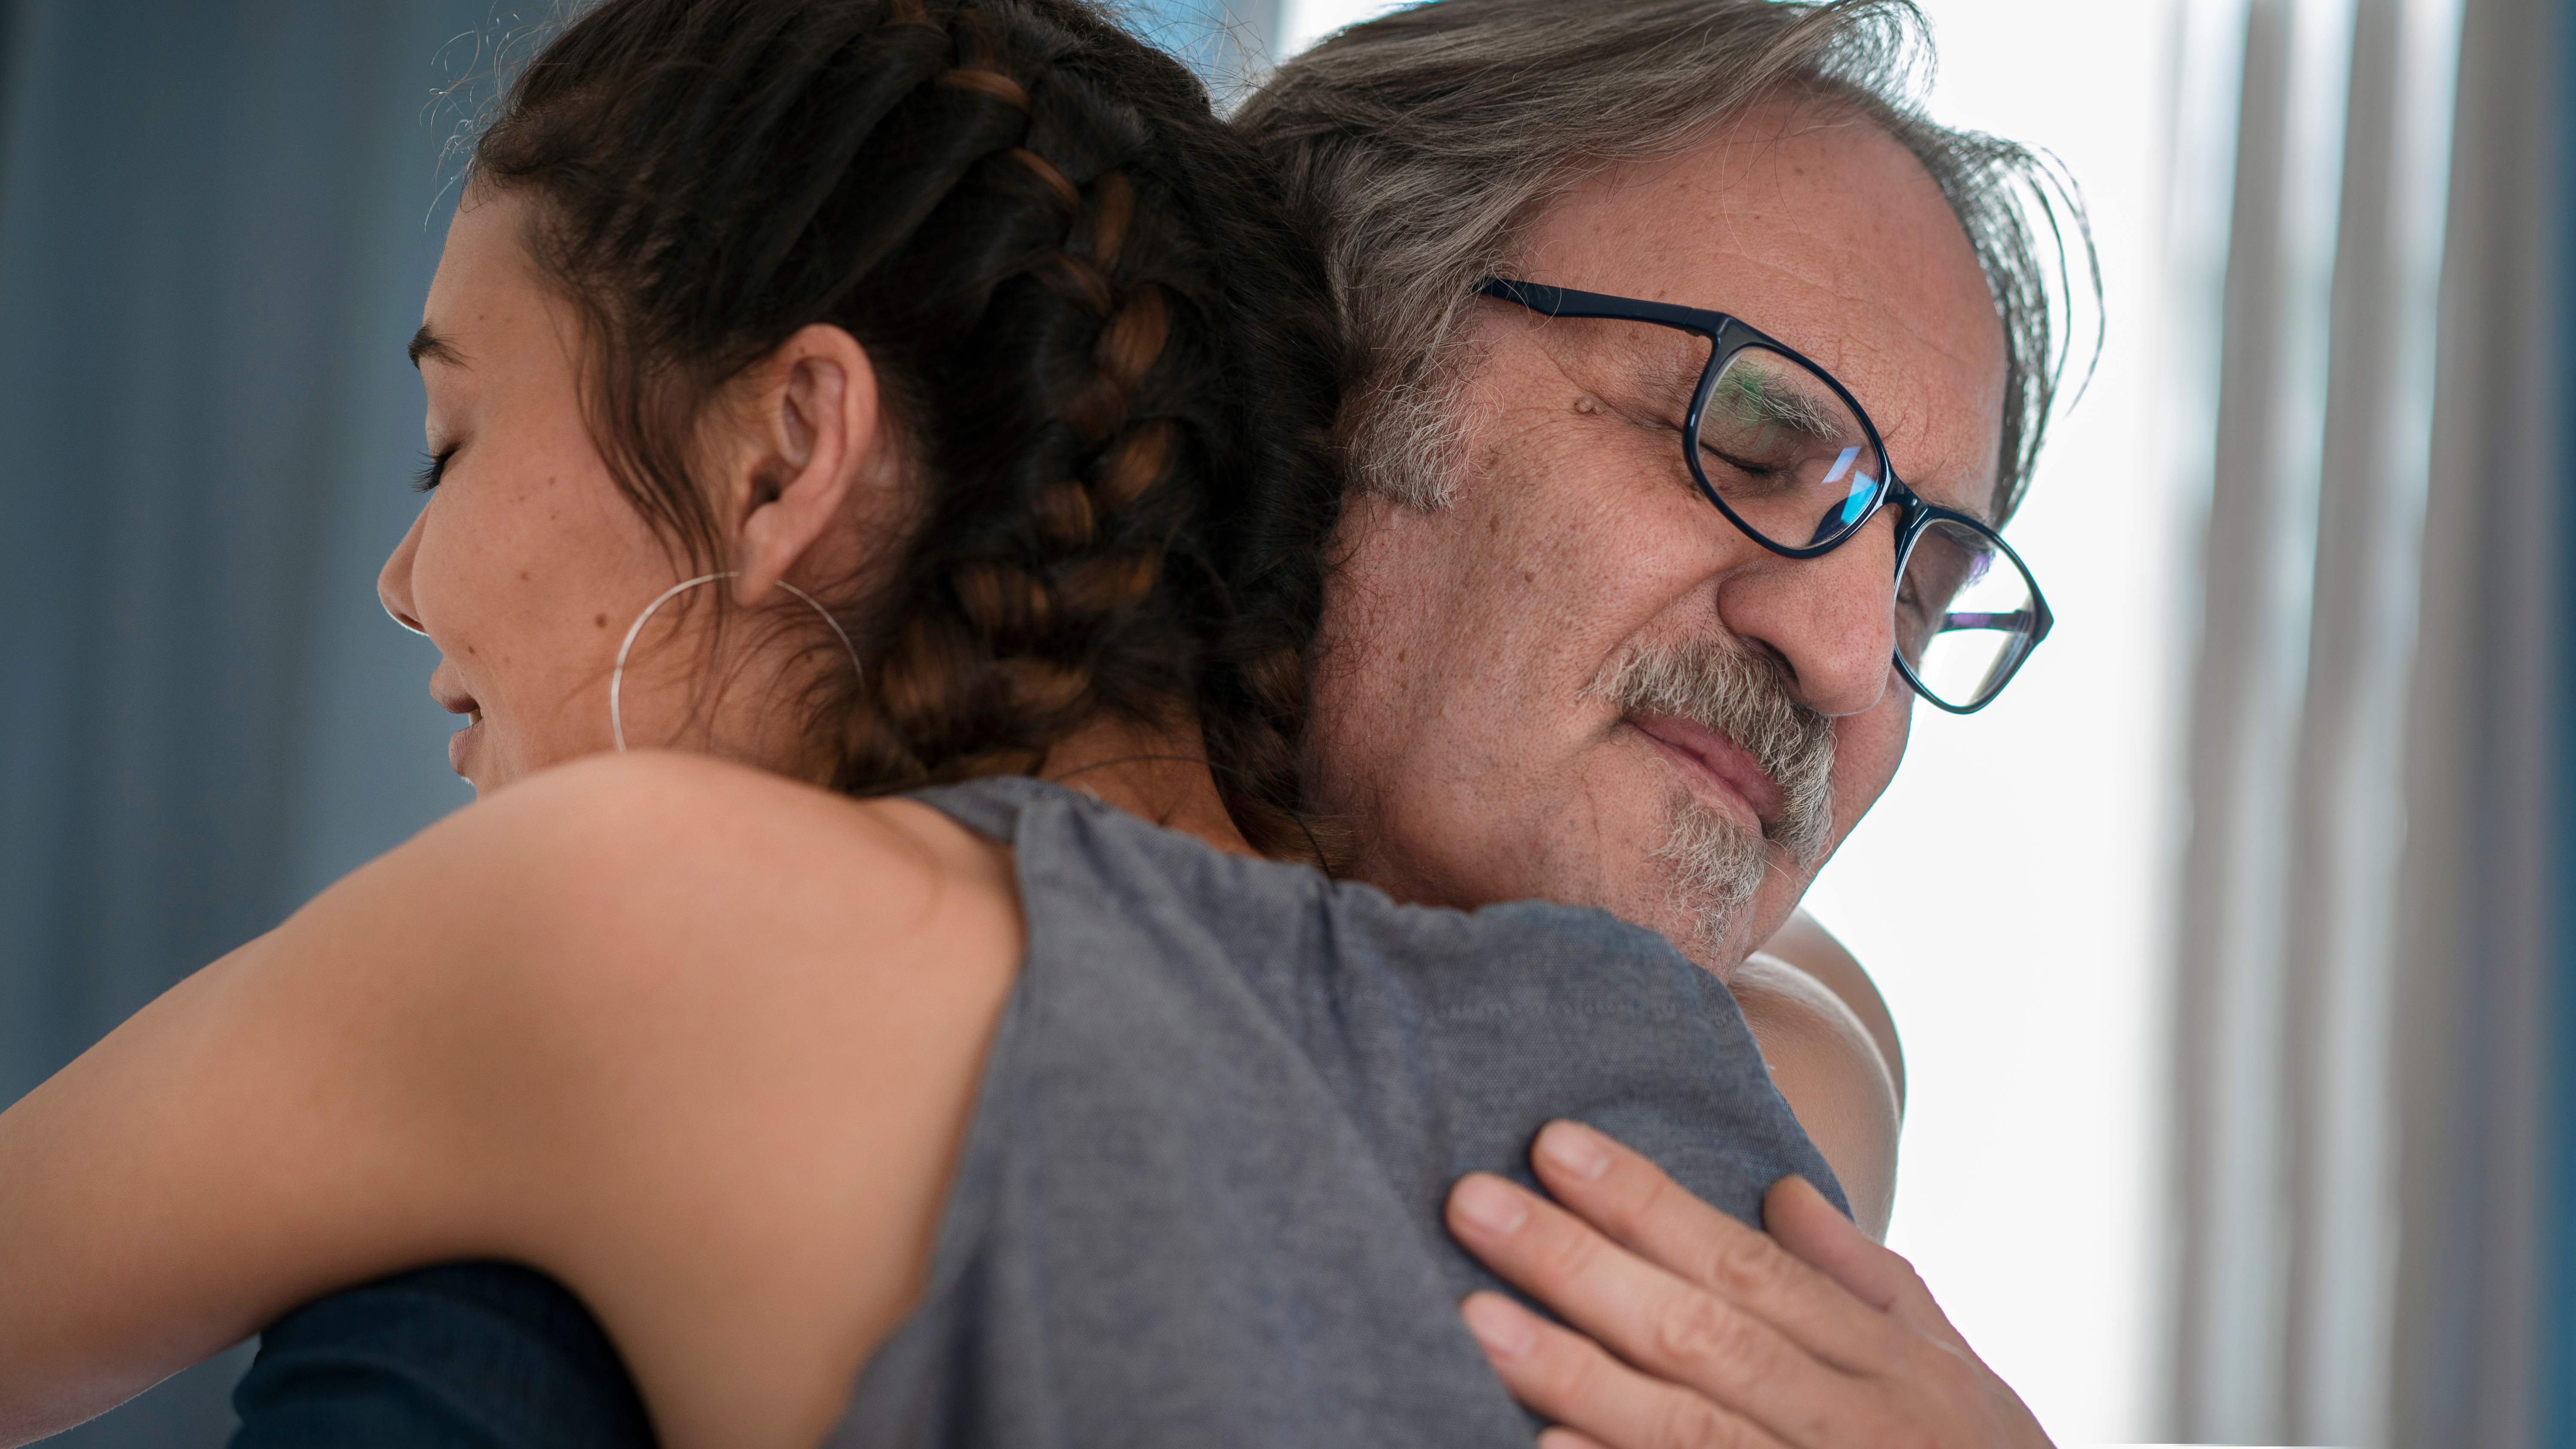 A man hugs his daughter | Source: Shutterstock